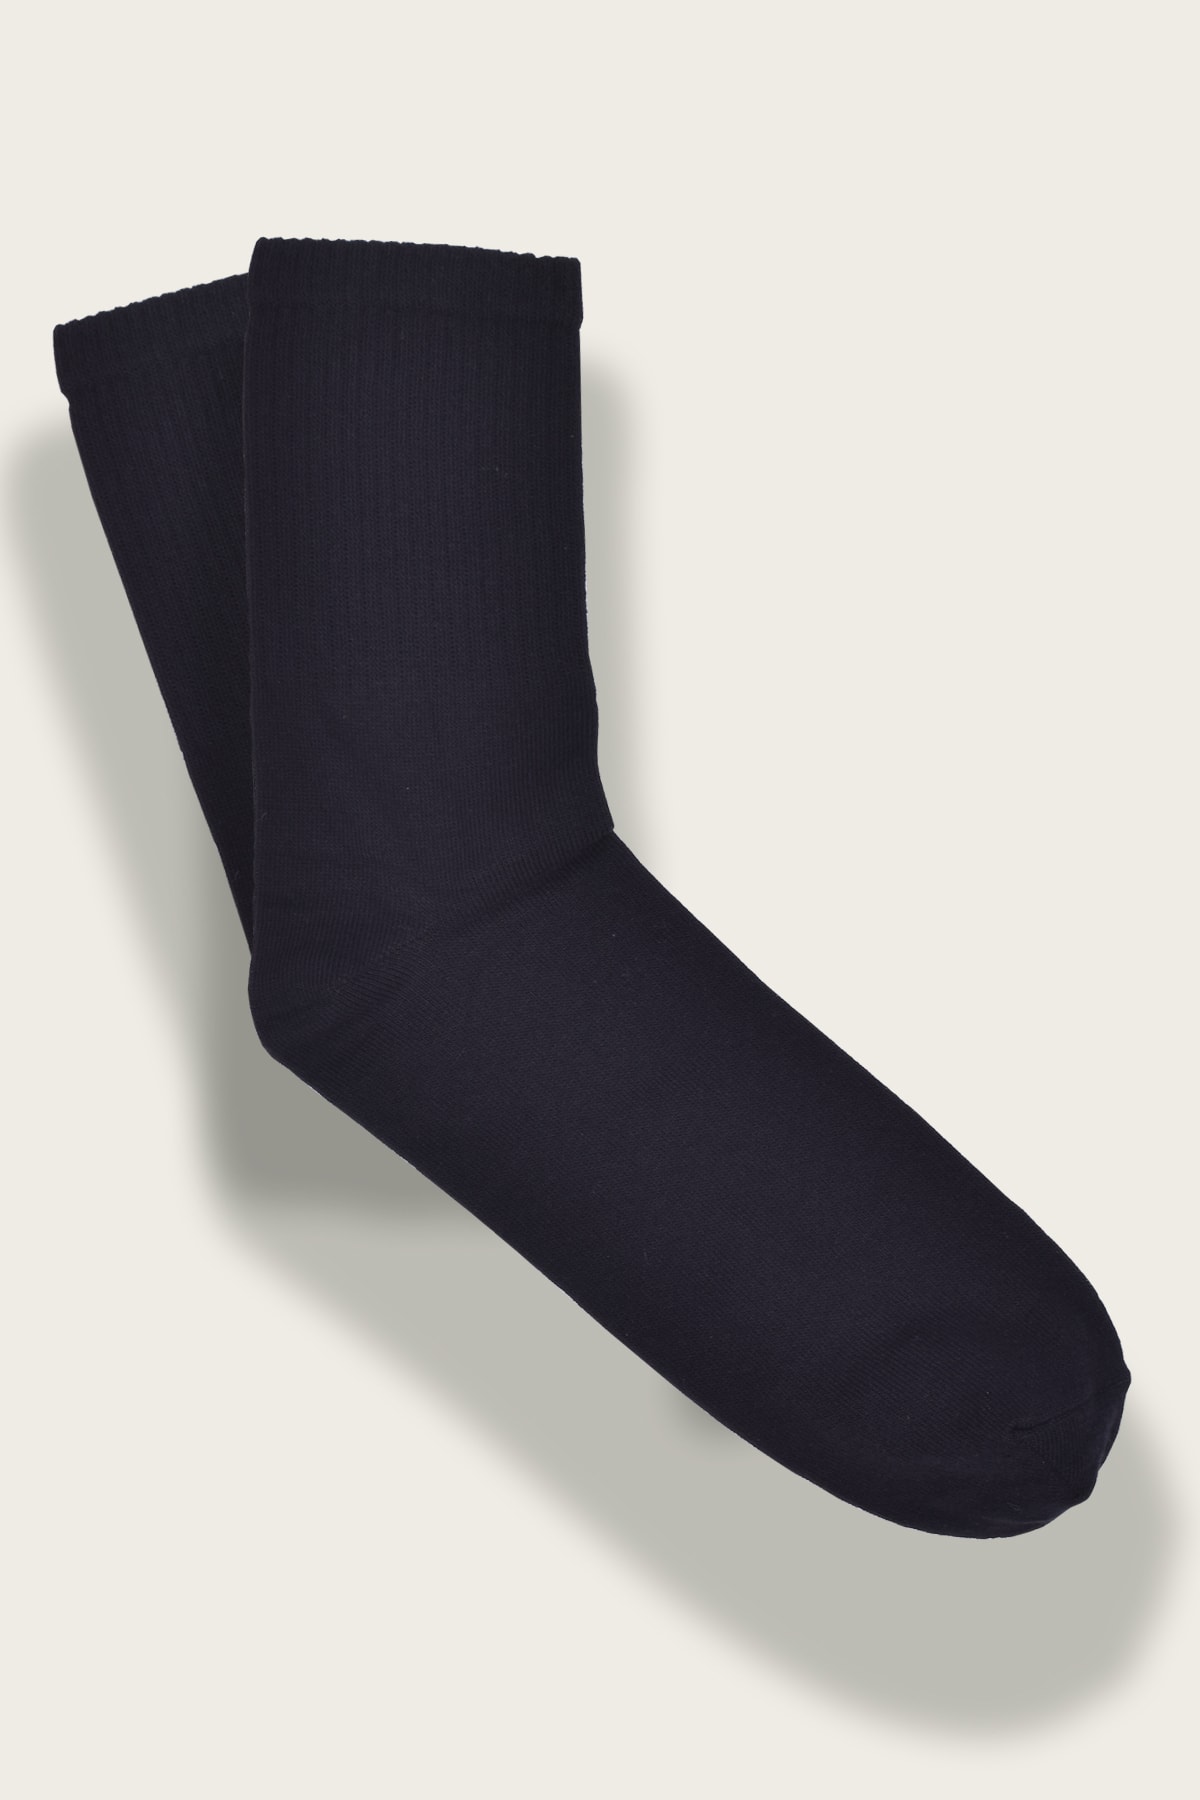 Belyy Socks 2'li Unisex Siyah Soket Çorap